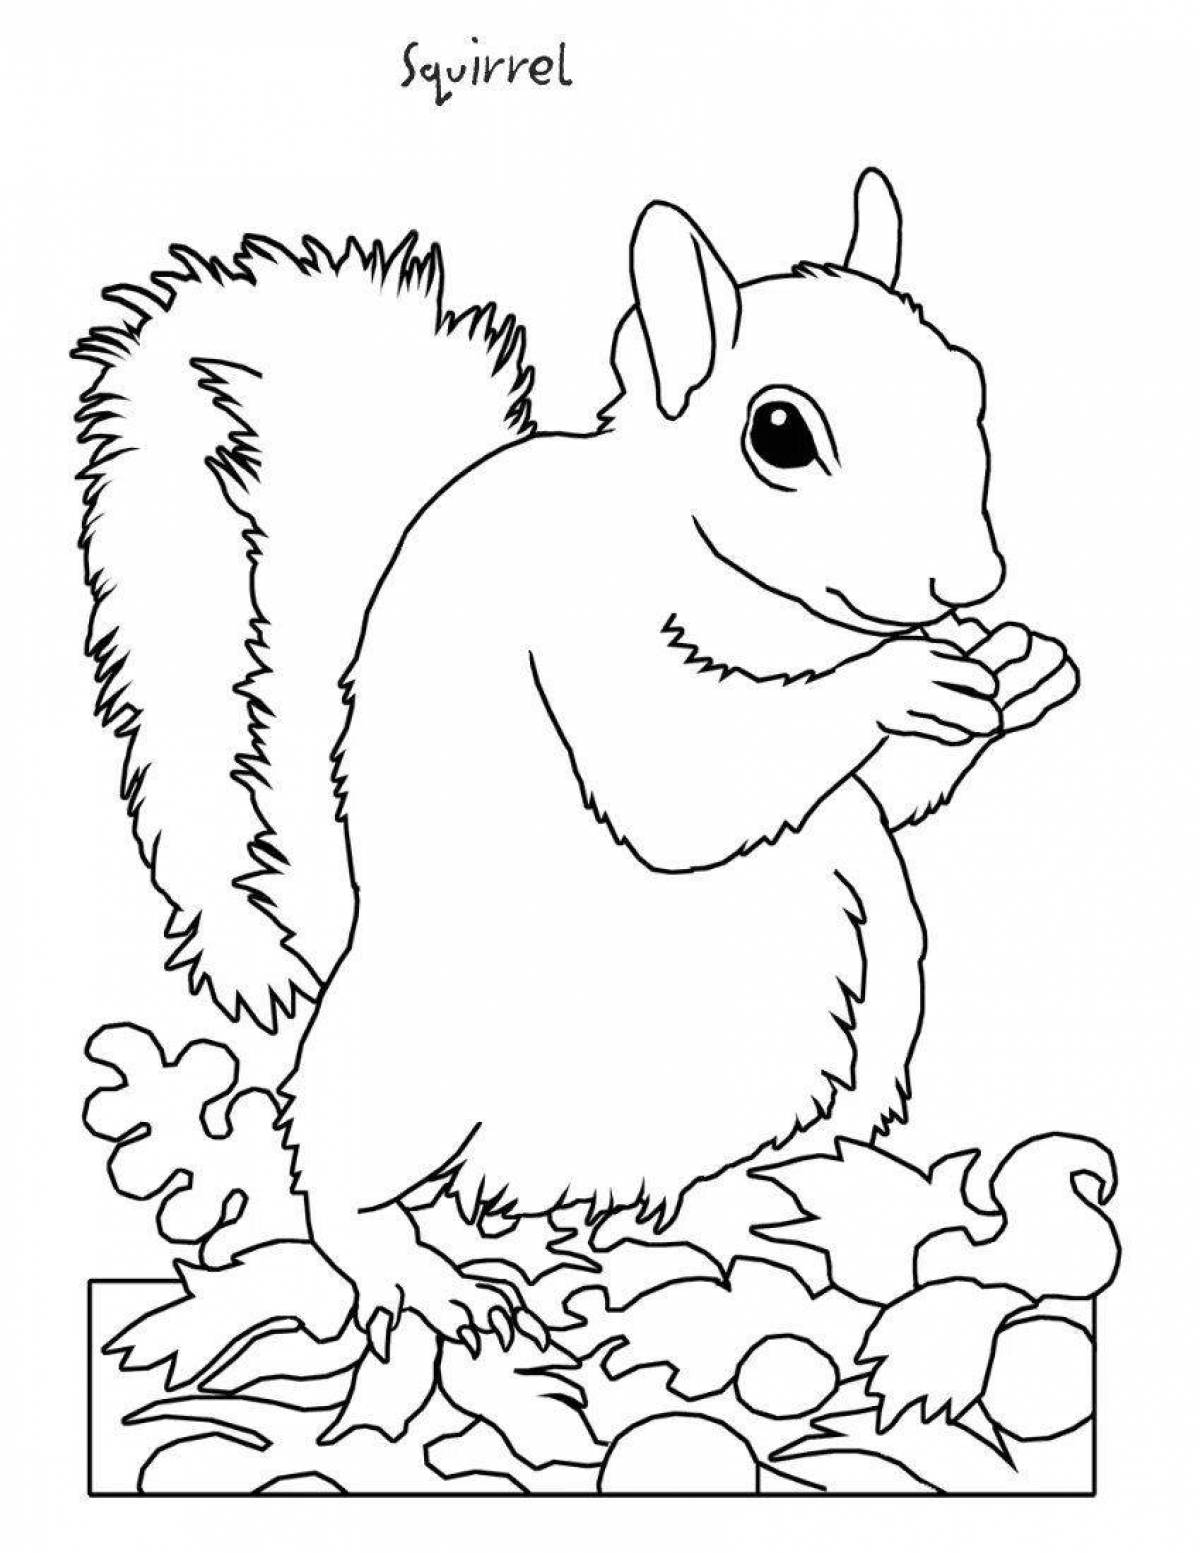 Live winter squirrel coloring book